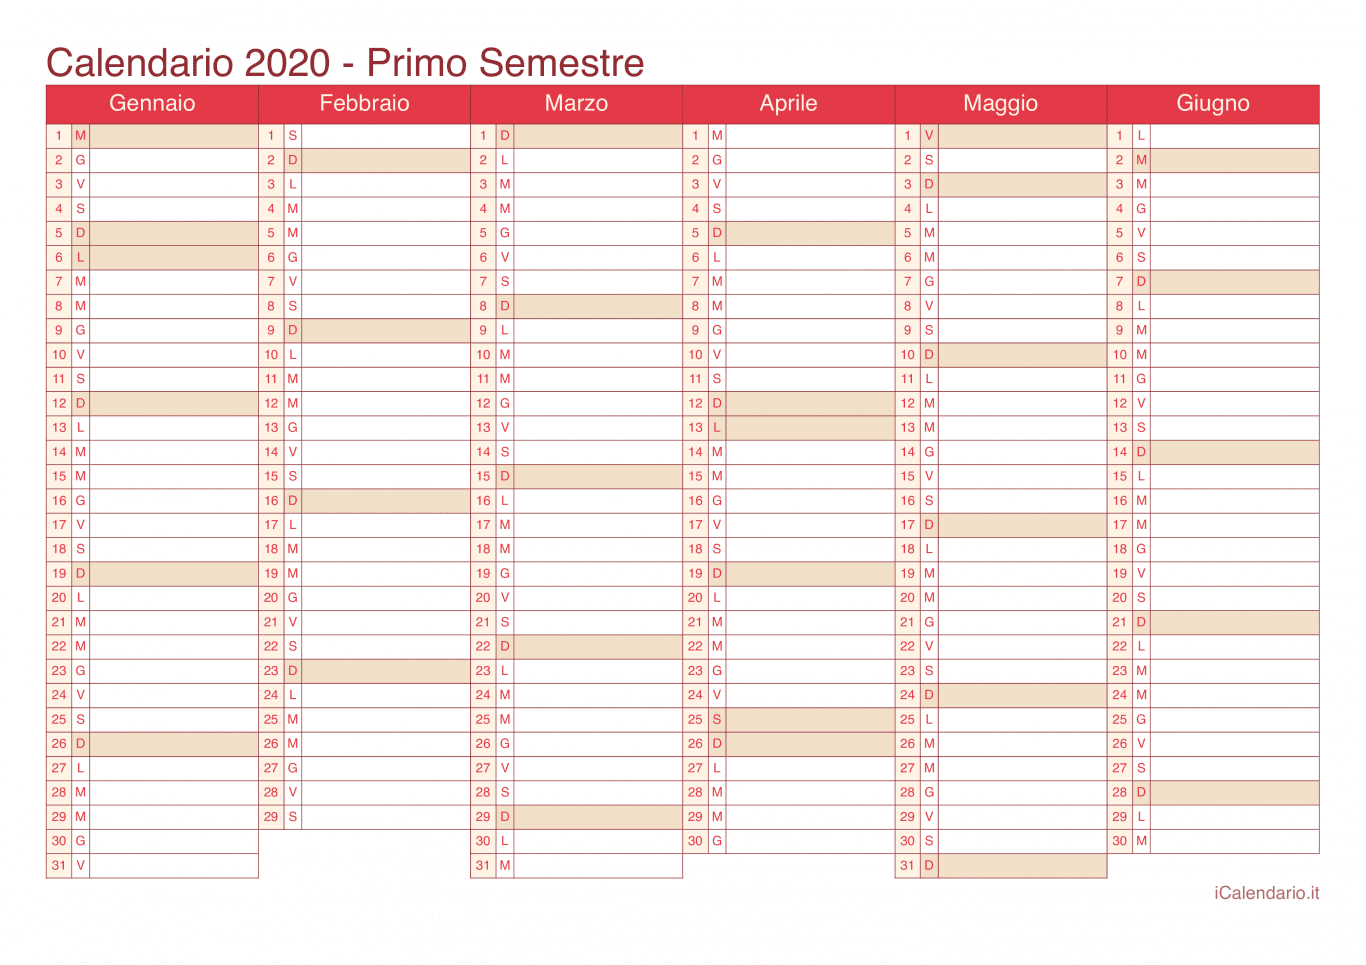 Calendario semestrale 2020 - Cherry